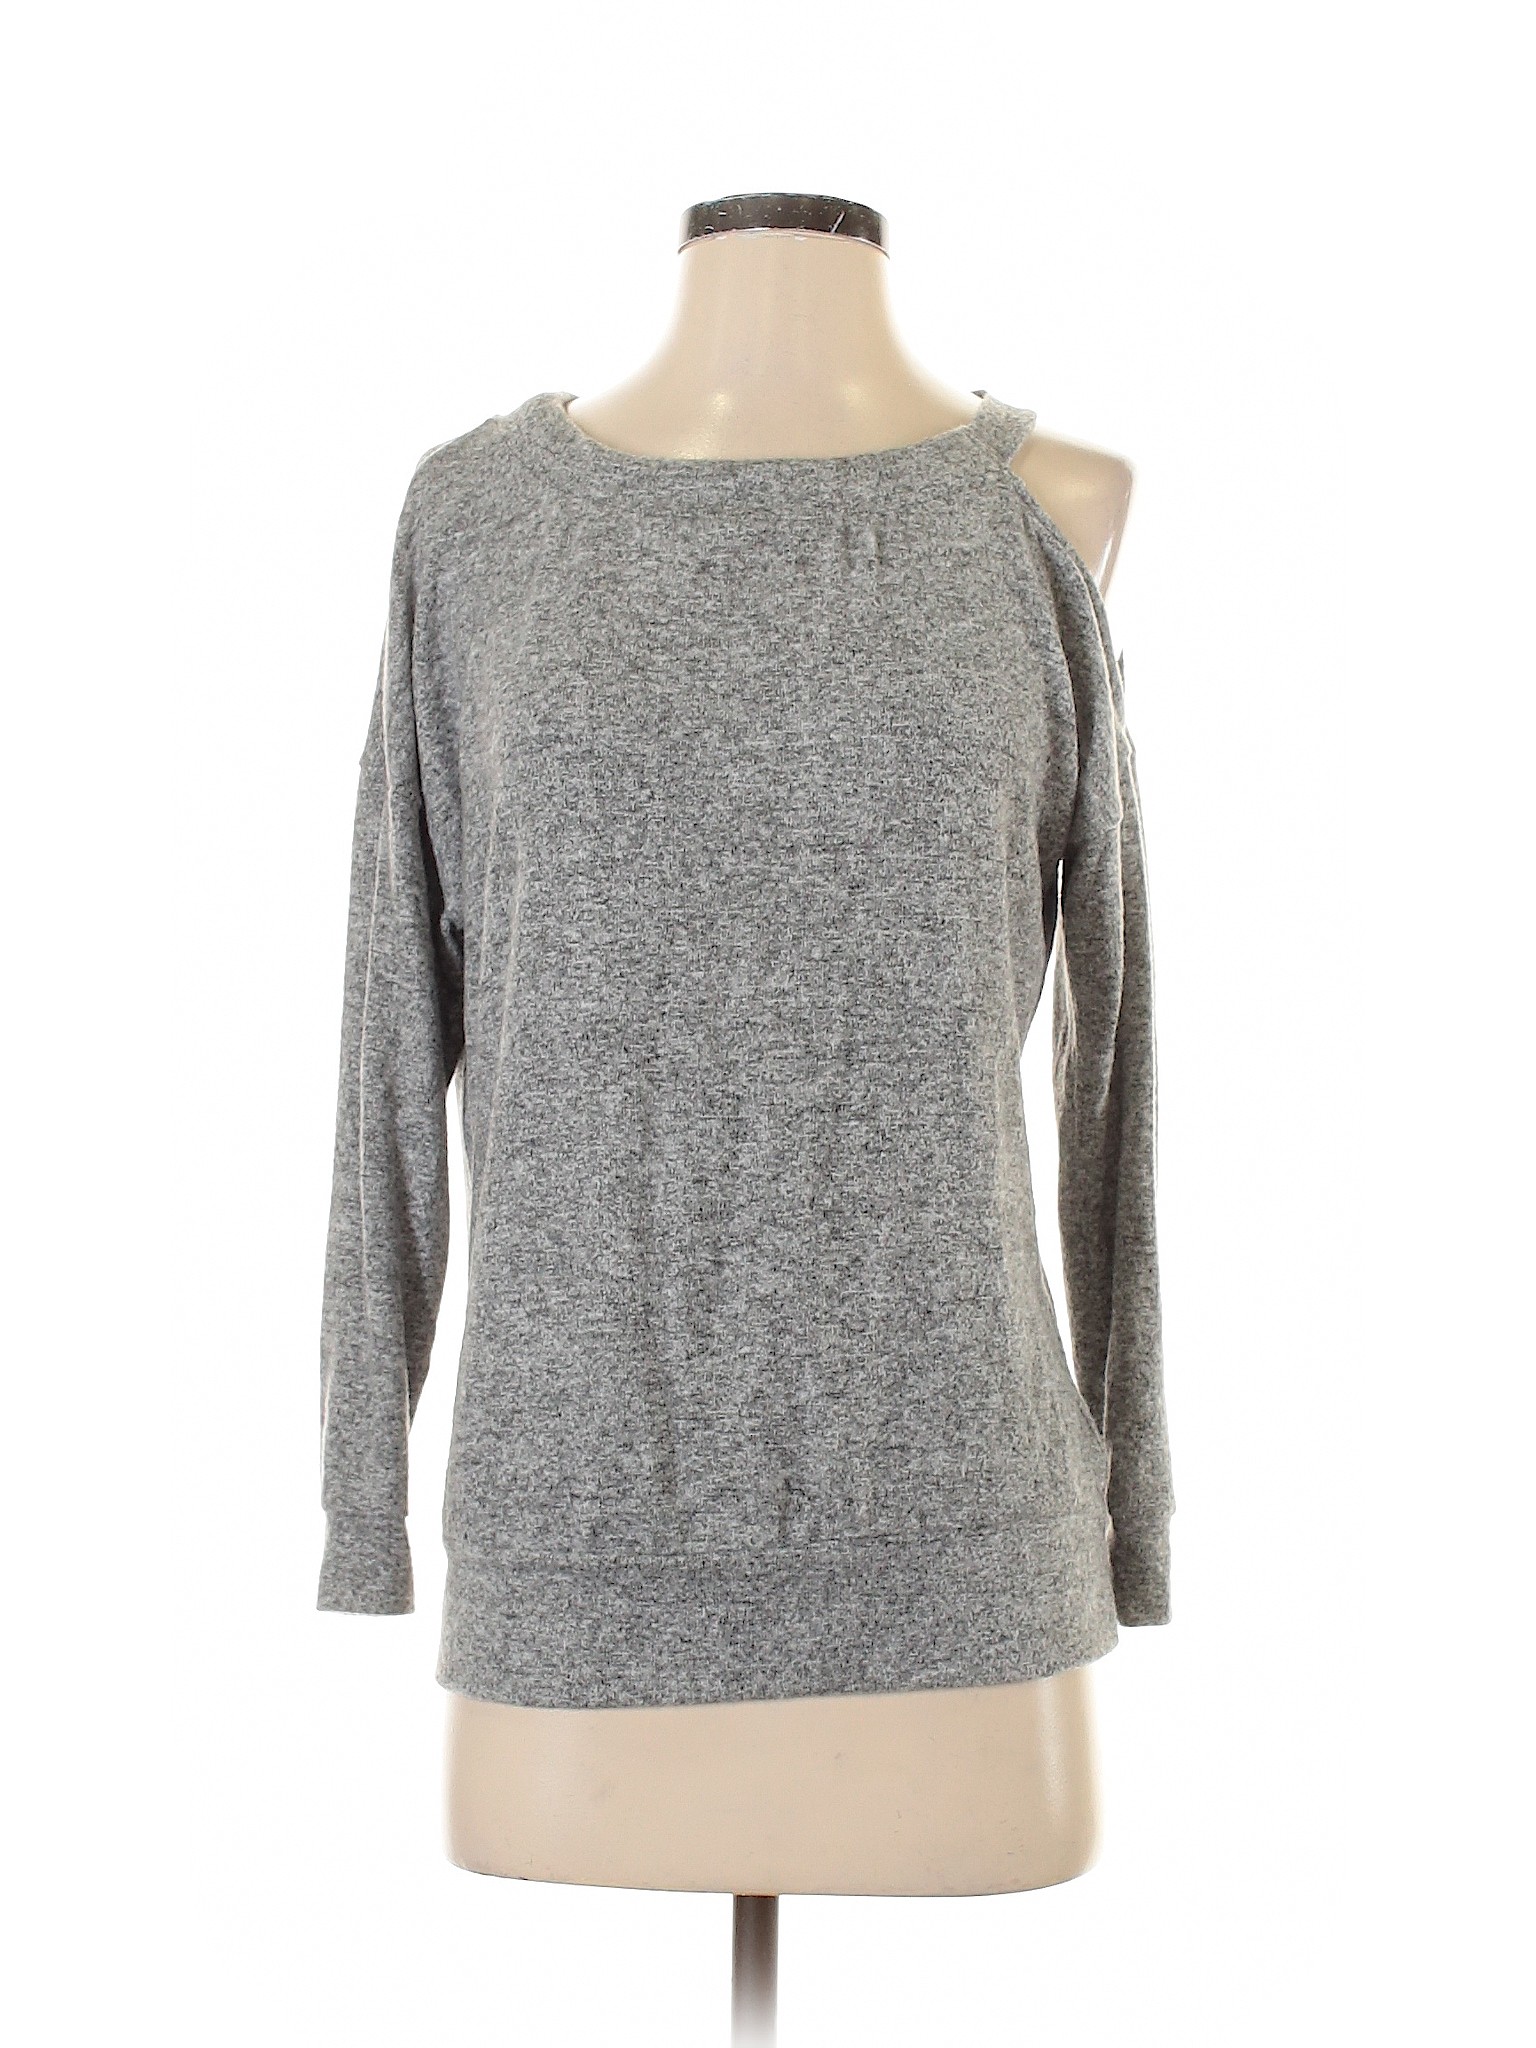 Gibson Women Gray Pullover Sweater XS | eBay